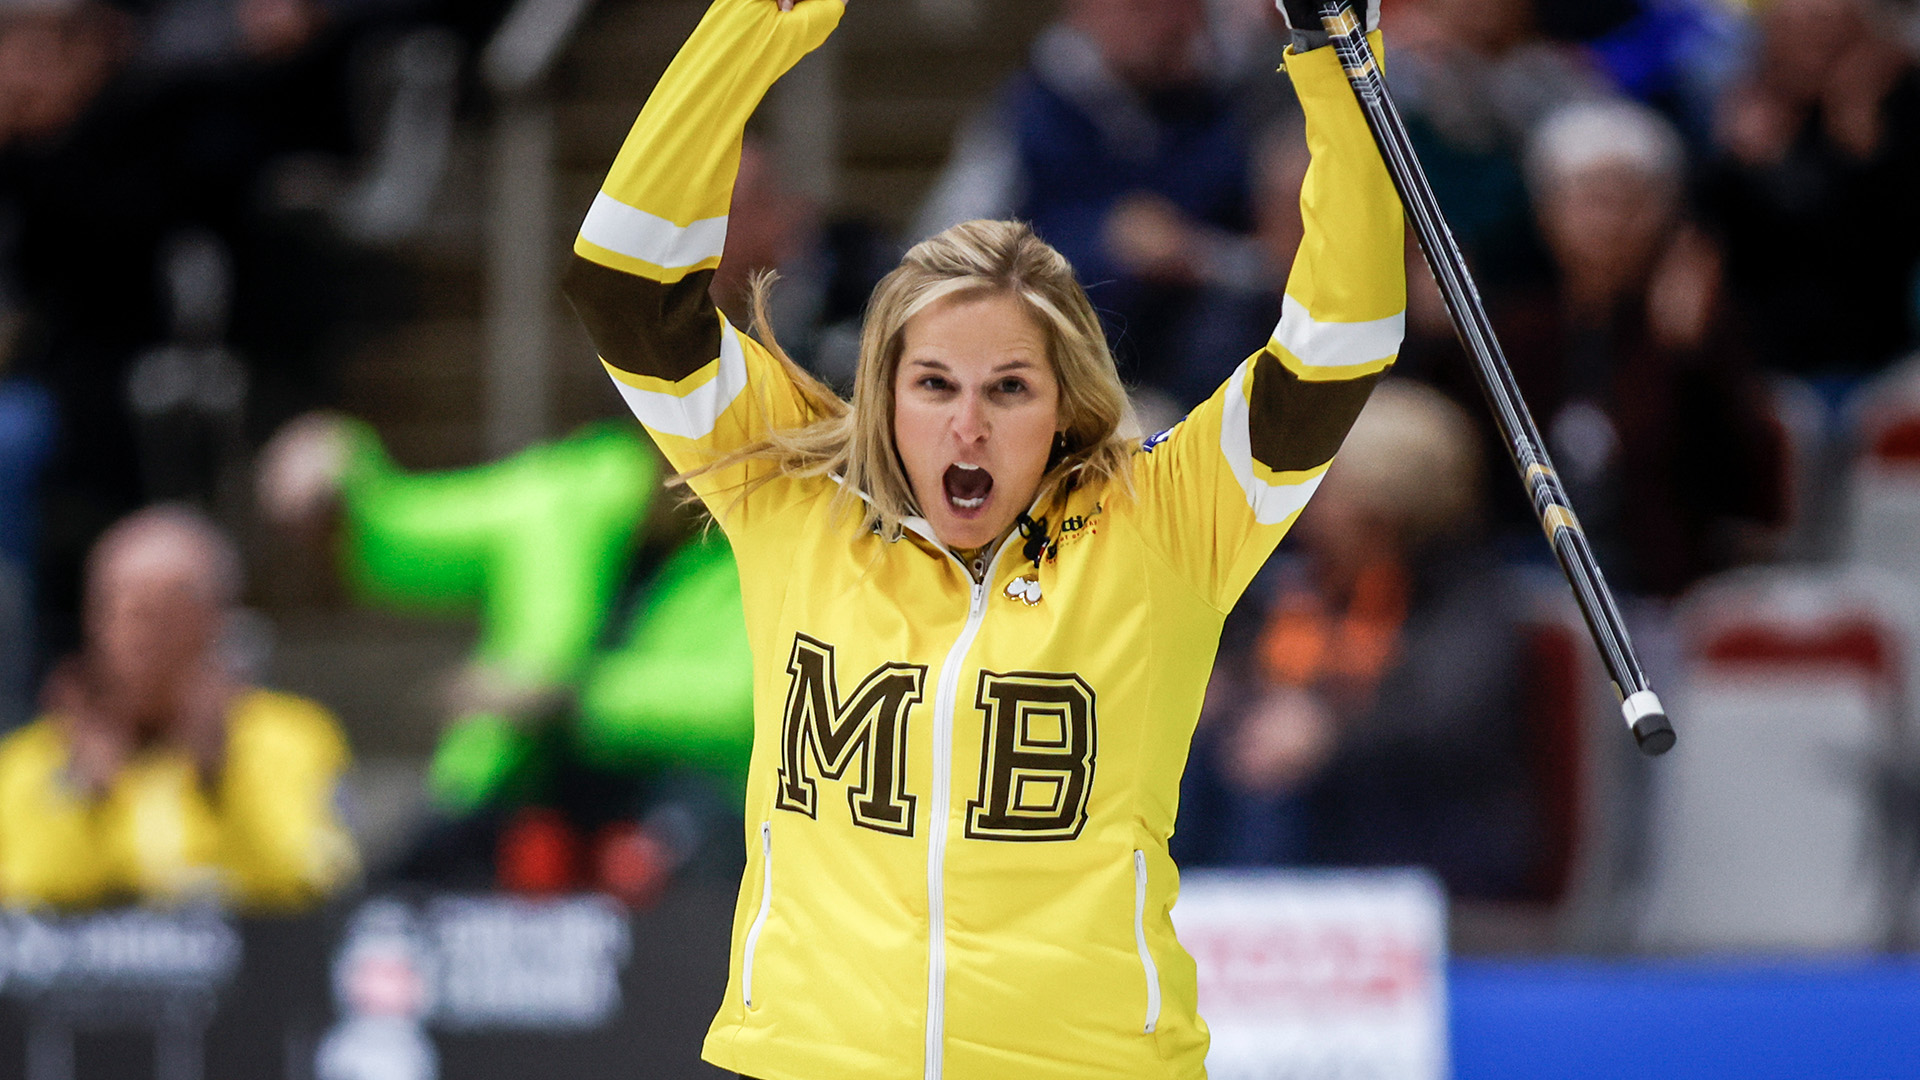 Jennifer Jones Announces Retirement from Team Curling